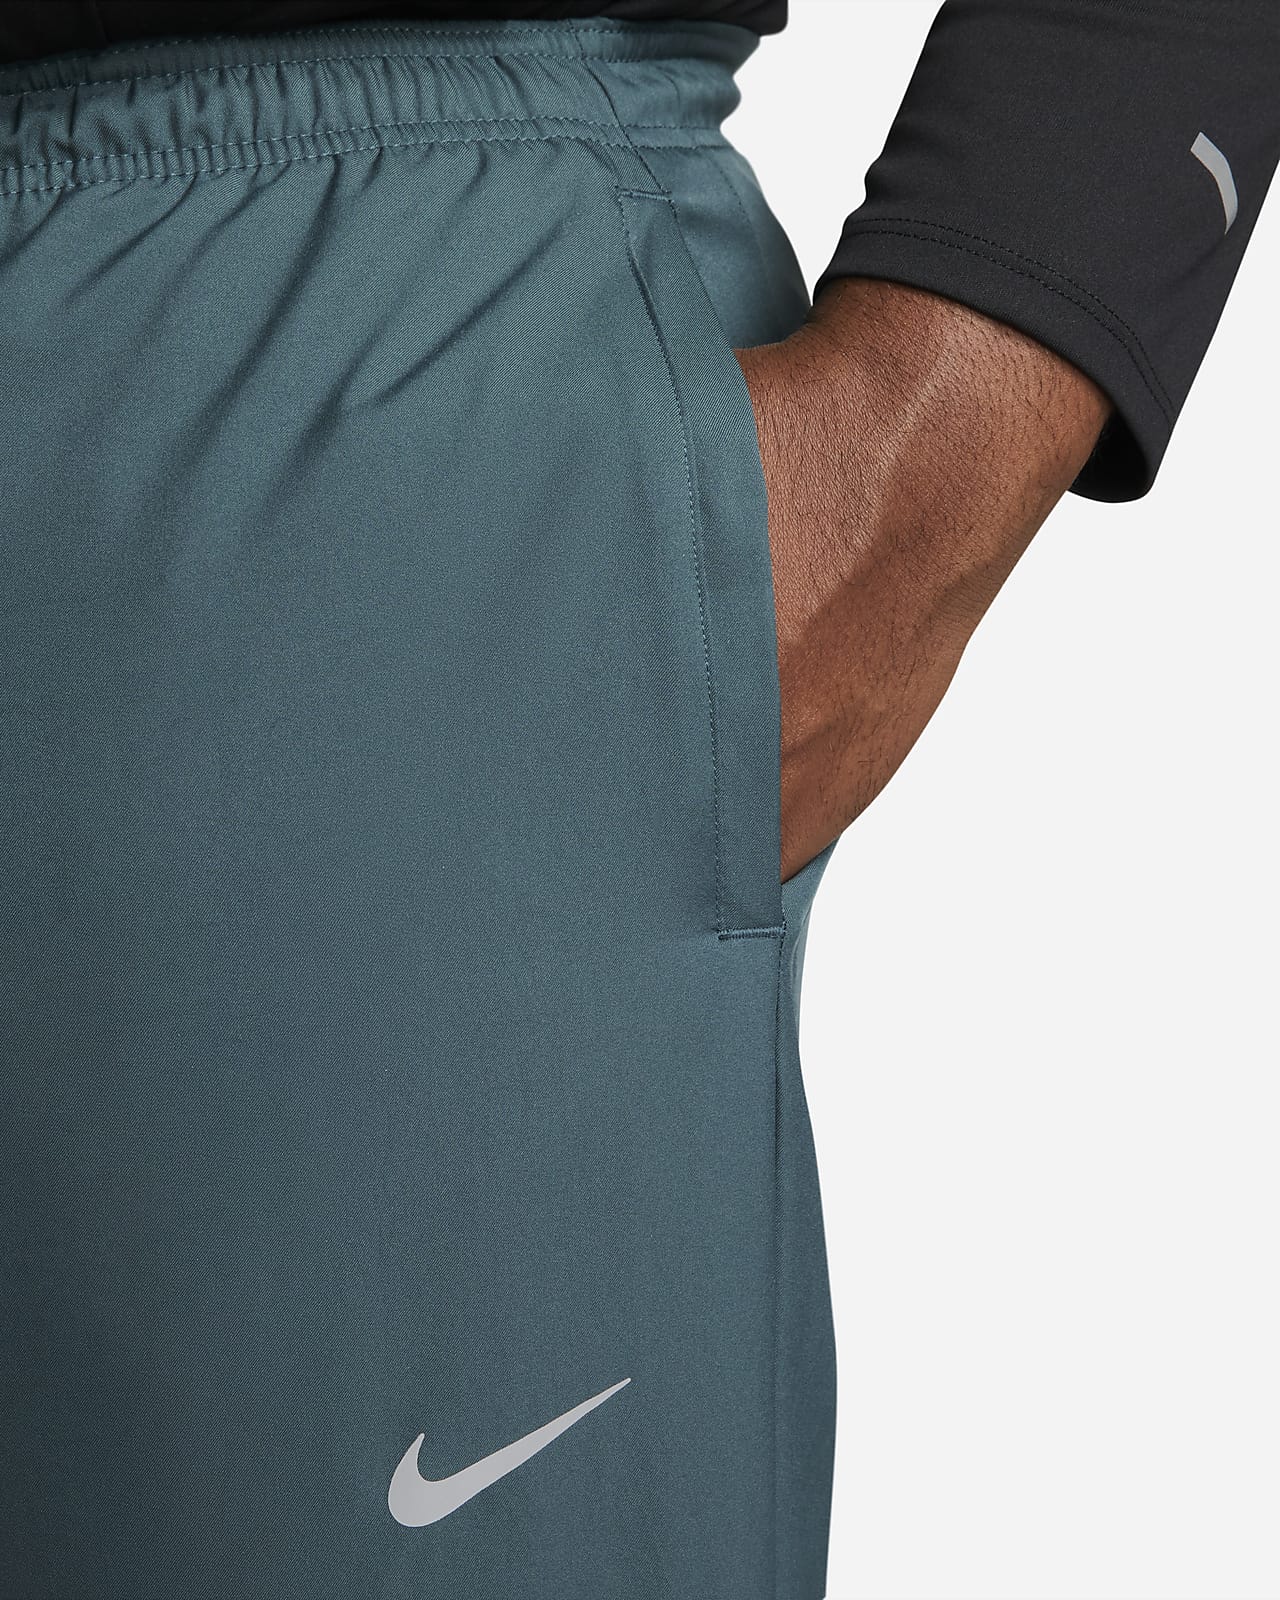 Vormen Indringing Origineel Nike Dri-FIT Challenger Men's Woven Running Pants. Nike.com